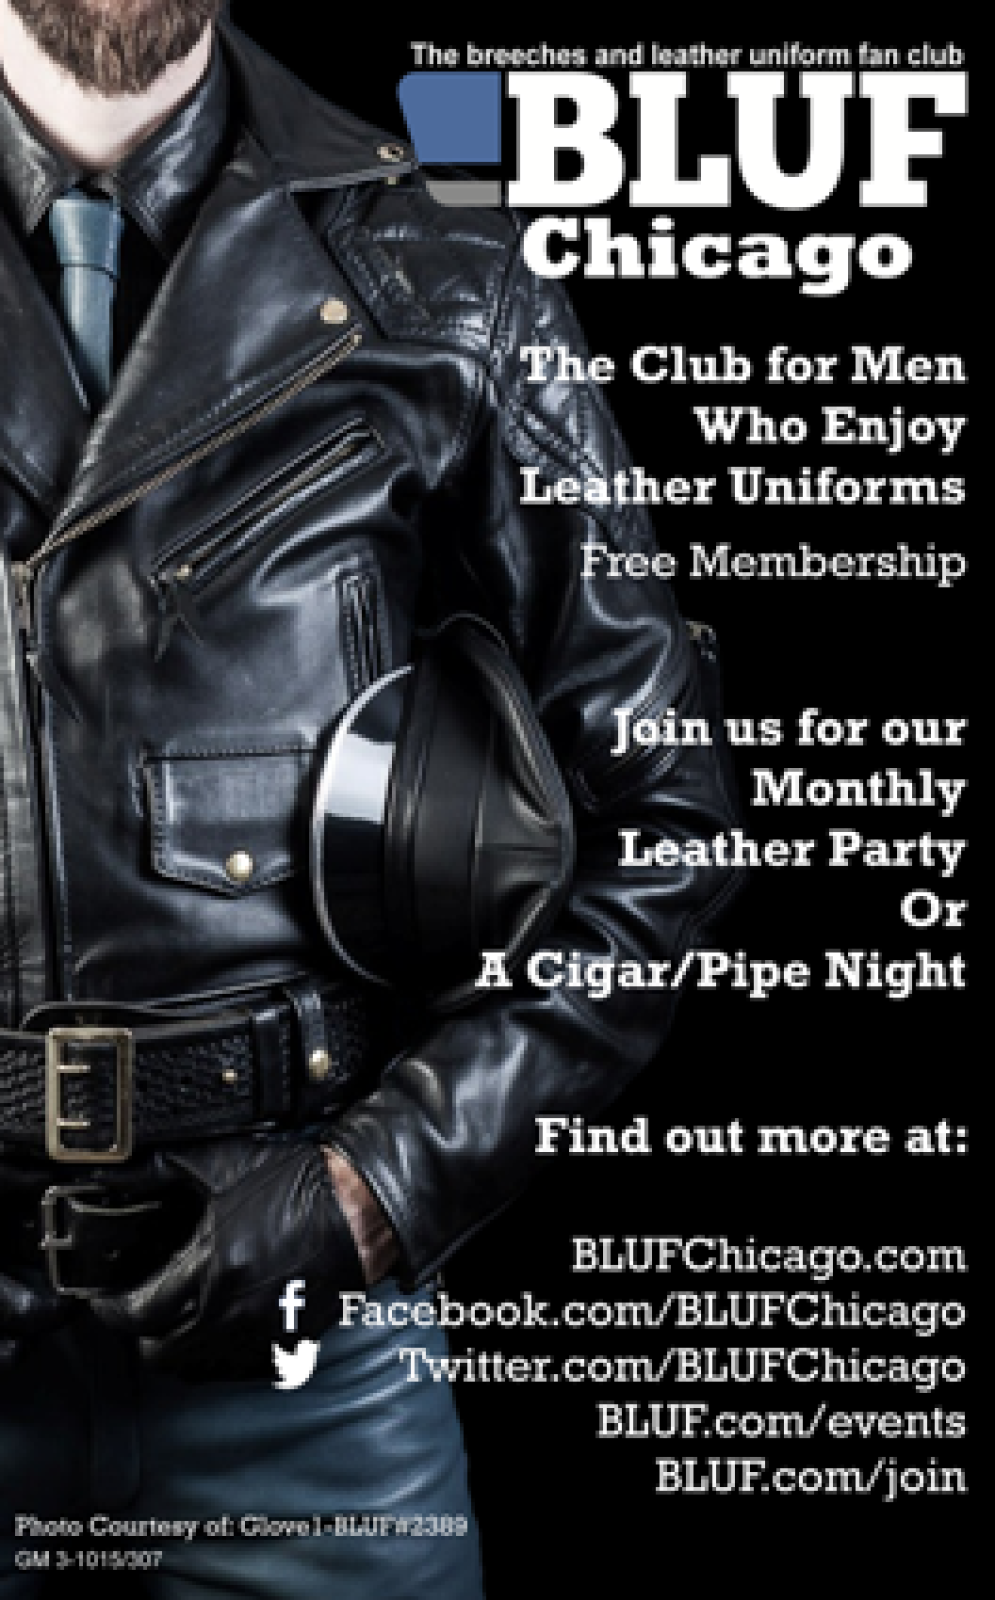 Bdsm club chicago